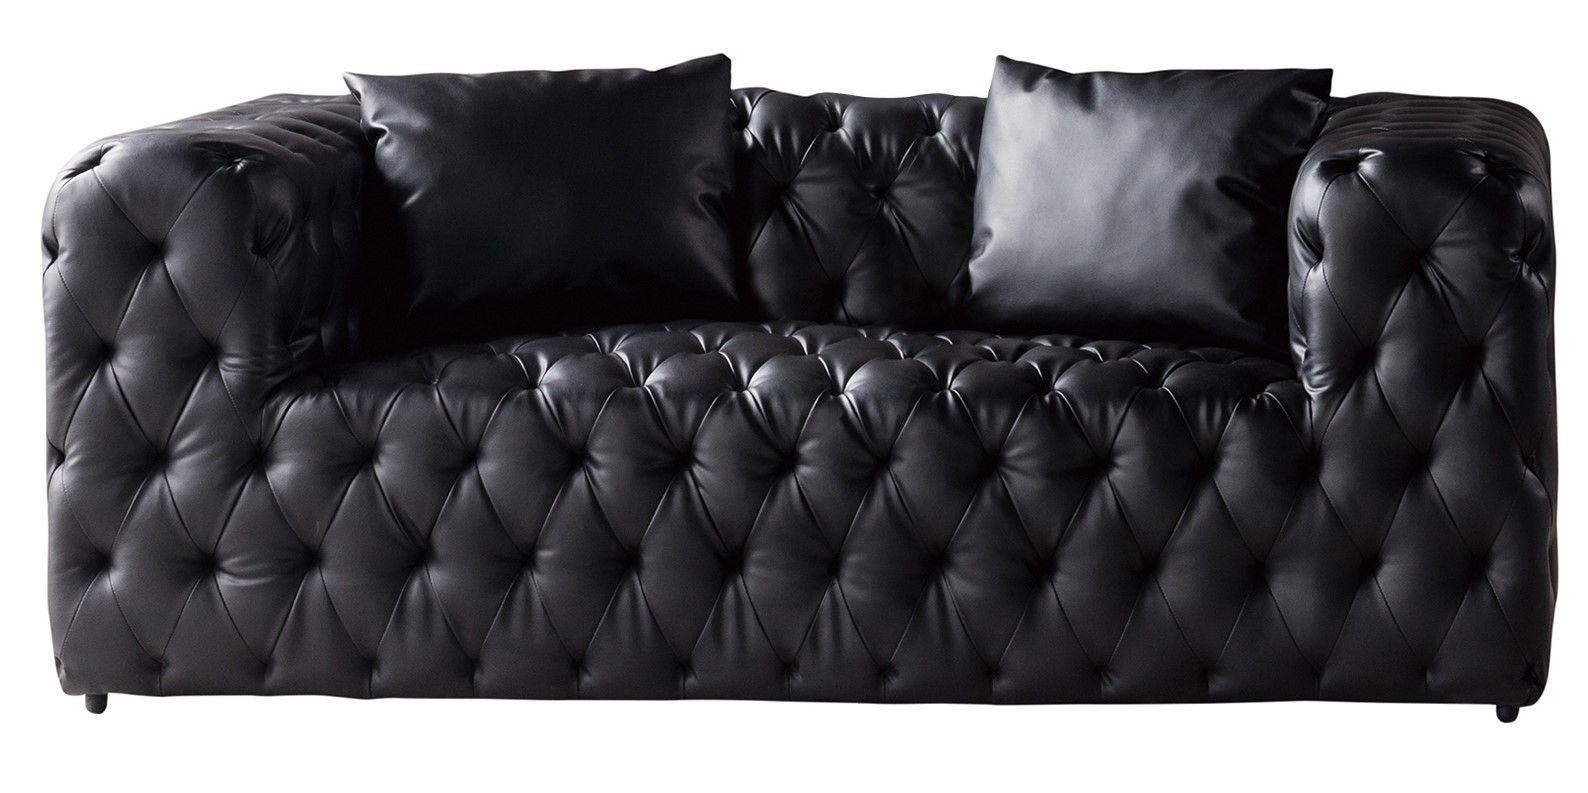 

    
American Eagle Furniture AE-D821-BK Sofa Set Black AE-D821-BK-2PC
